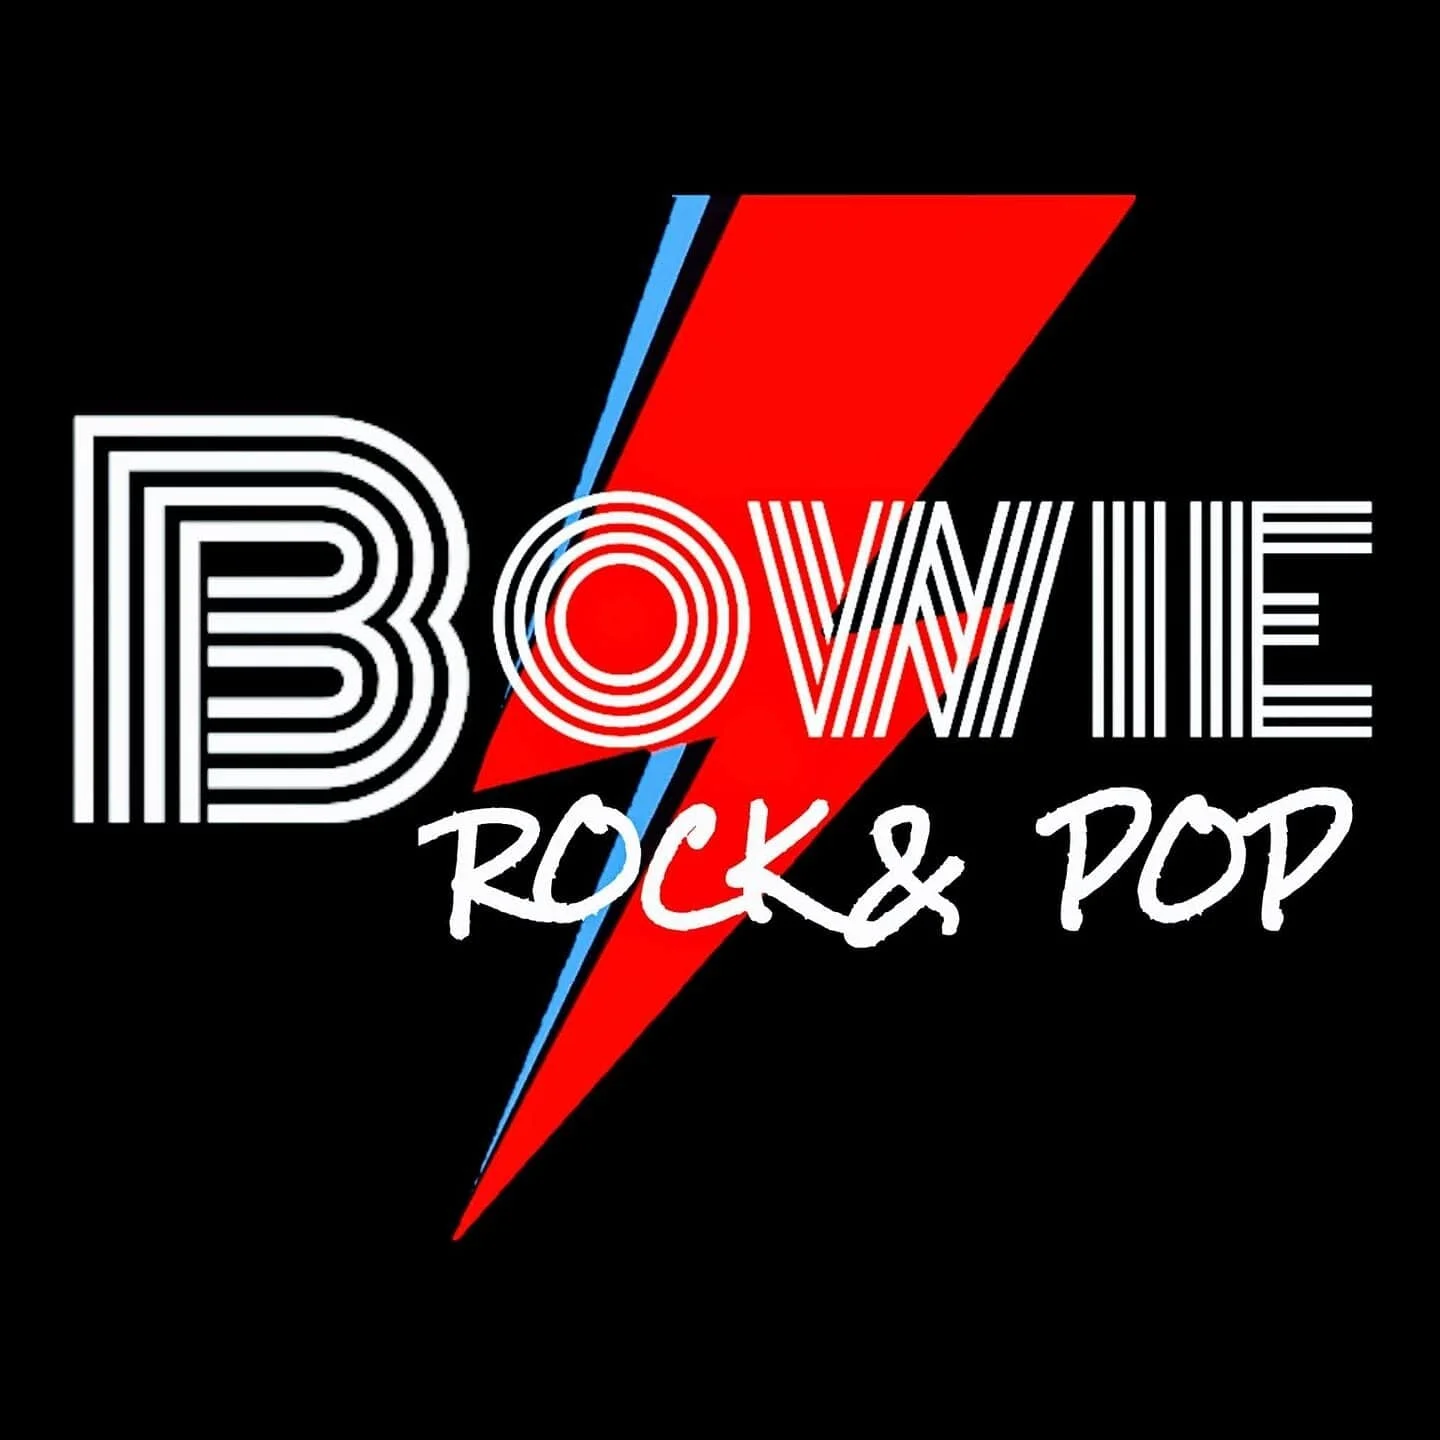 Bar-bowie-rock-pop-31524